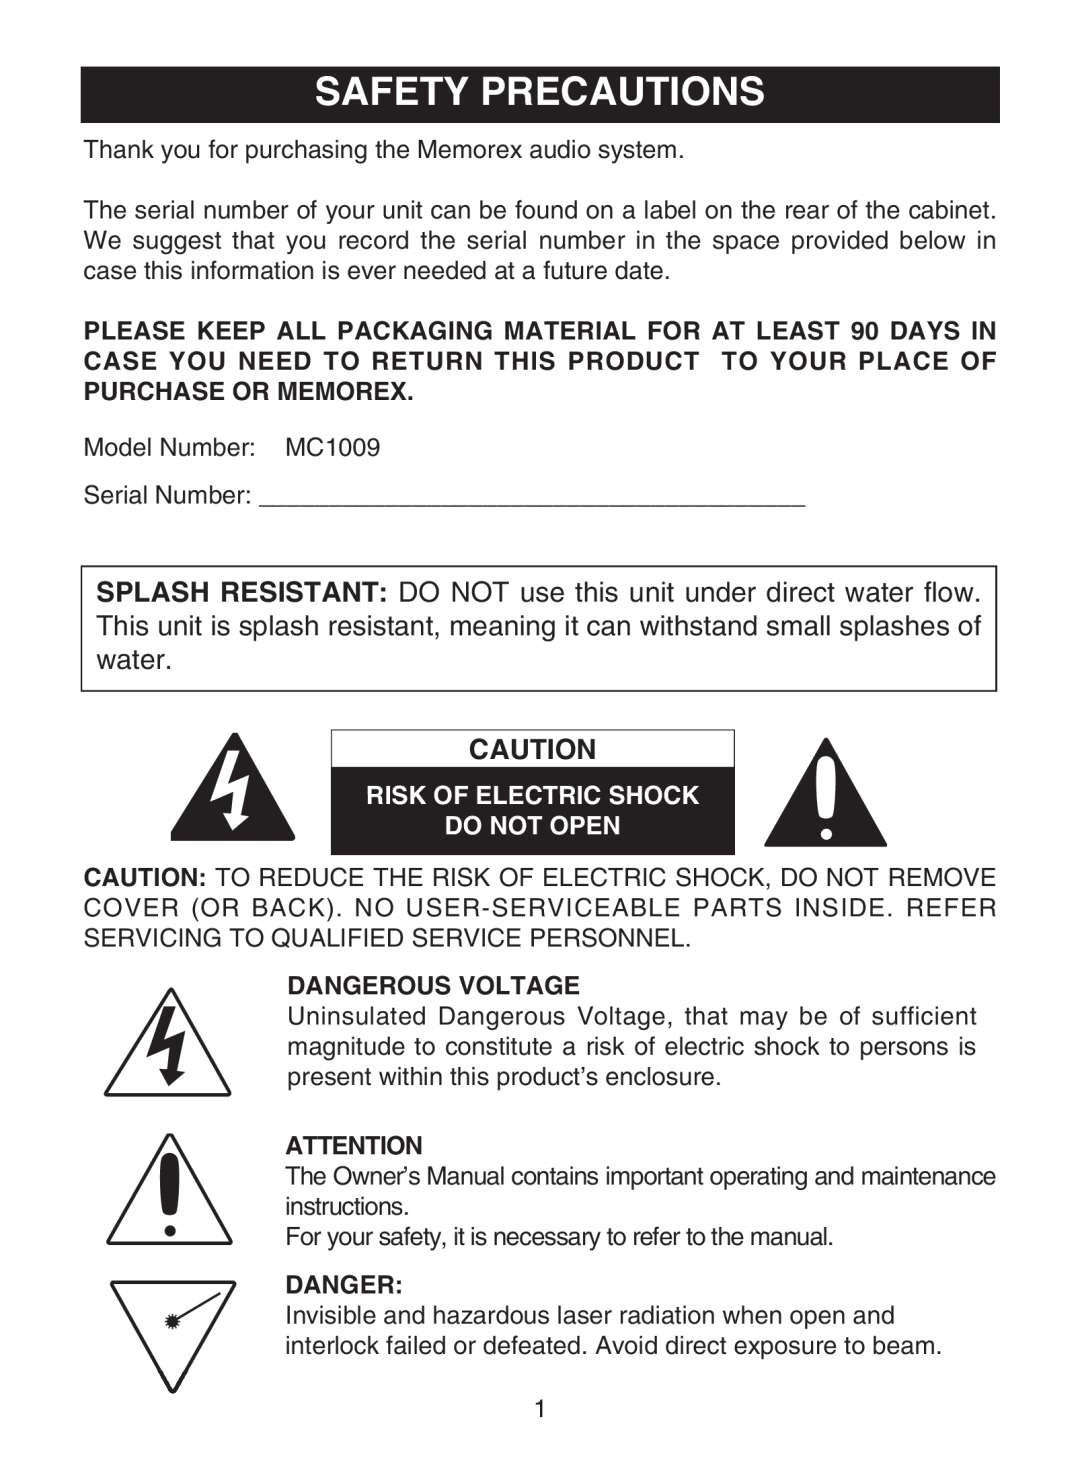 Memorex MC1009 manual Safety Precautions, Risk Of Electric Shock Do Not Open, Dangerous Voltage 